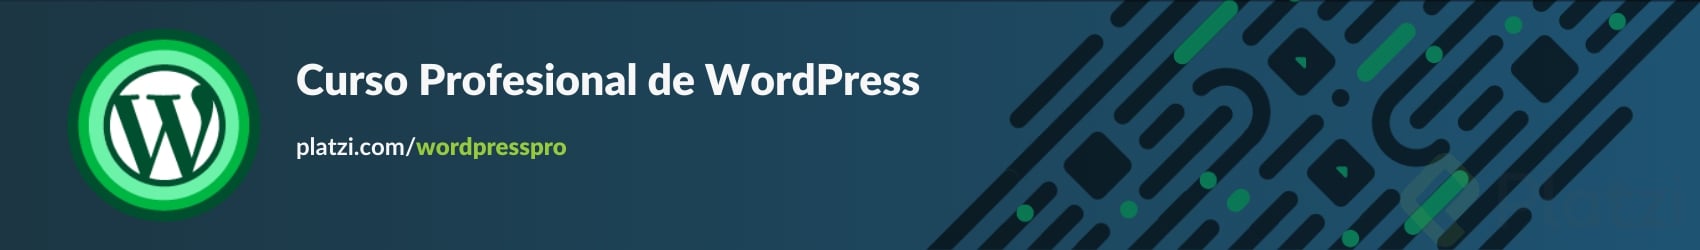 Curso Profesional de WordPress en Platzi